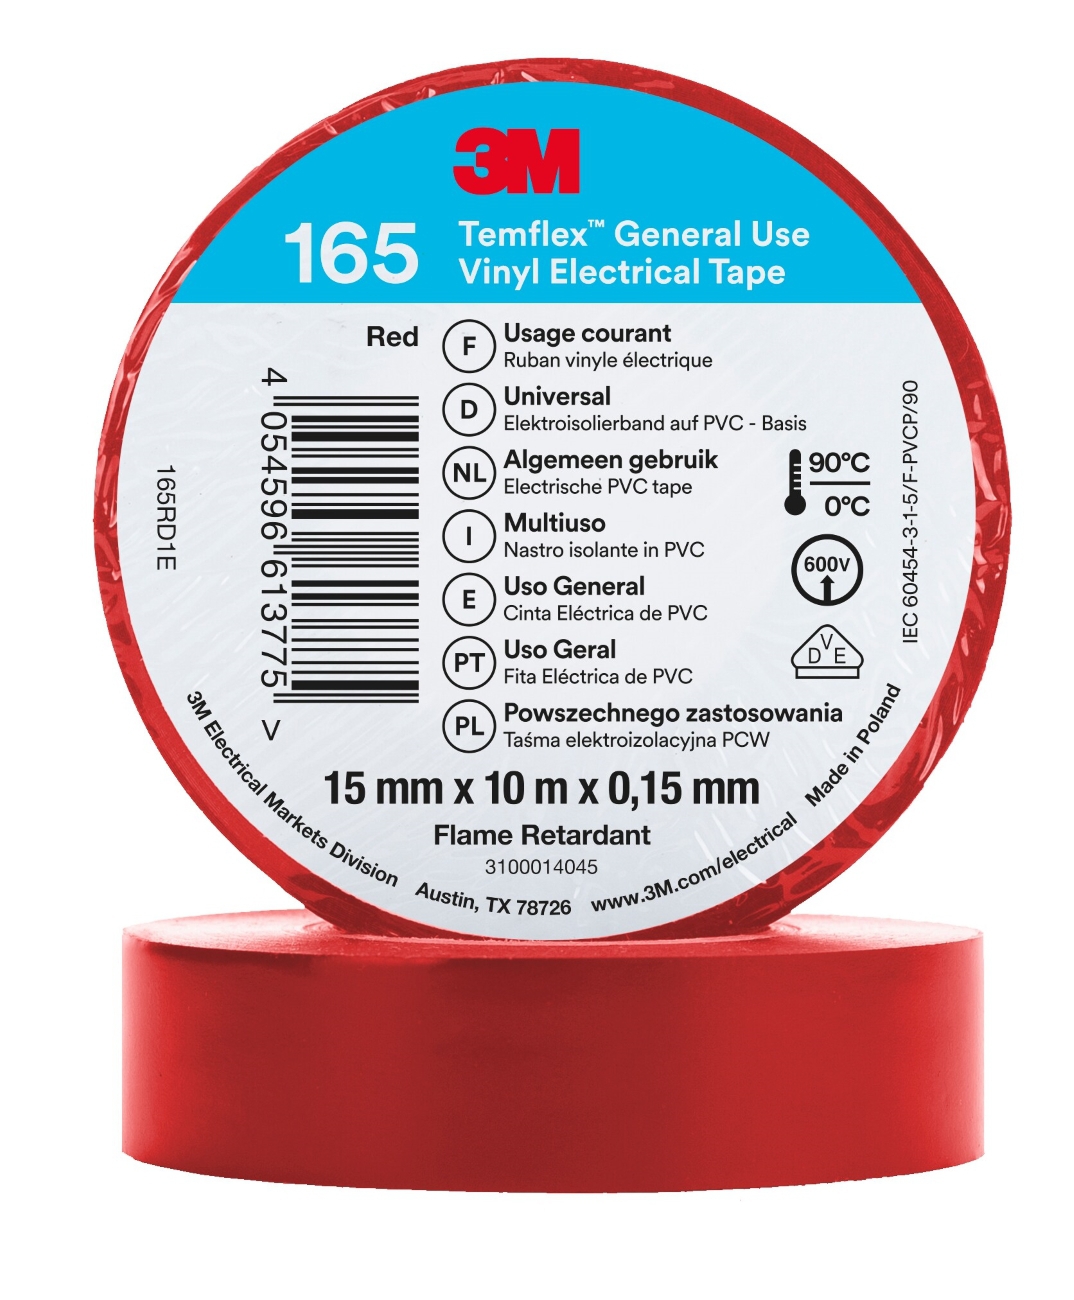 3M Temflex 165 vinyl electrical insulating tape, red, 15 mm x 10 m, 0.15 mm